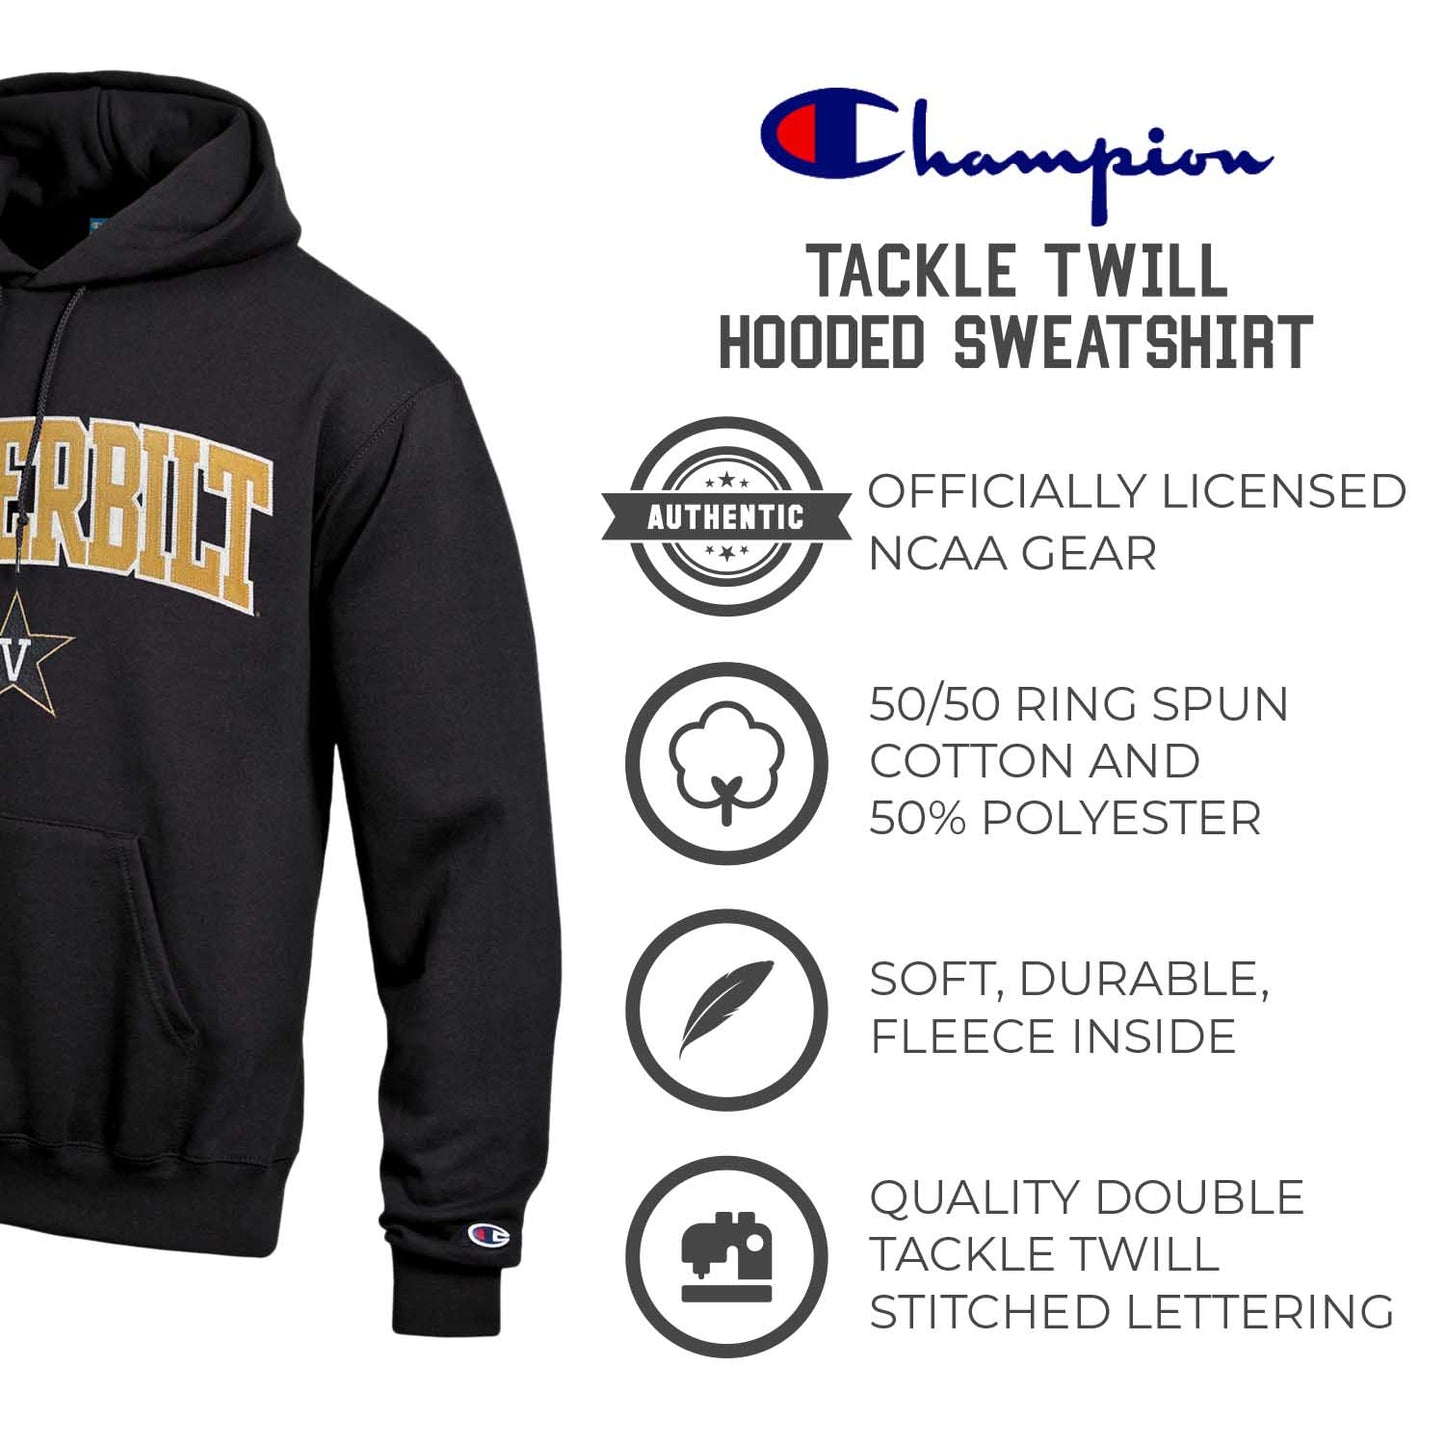 Vanderbilt Commodores Champion Adult Tackle Twill Hooded Sweatshirt - Black